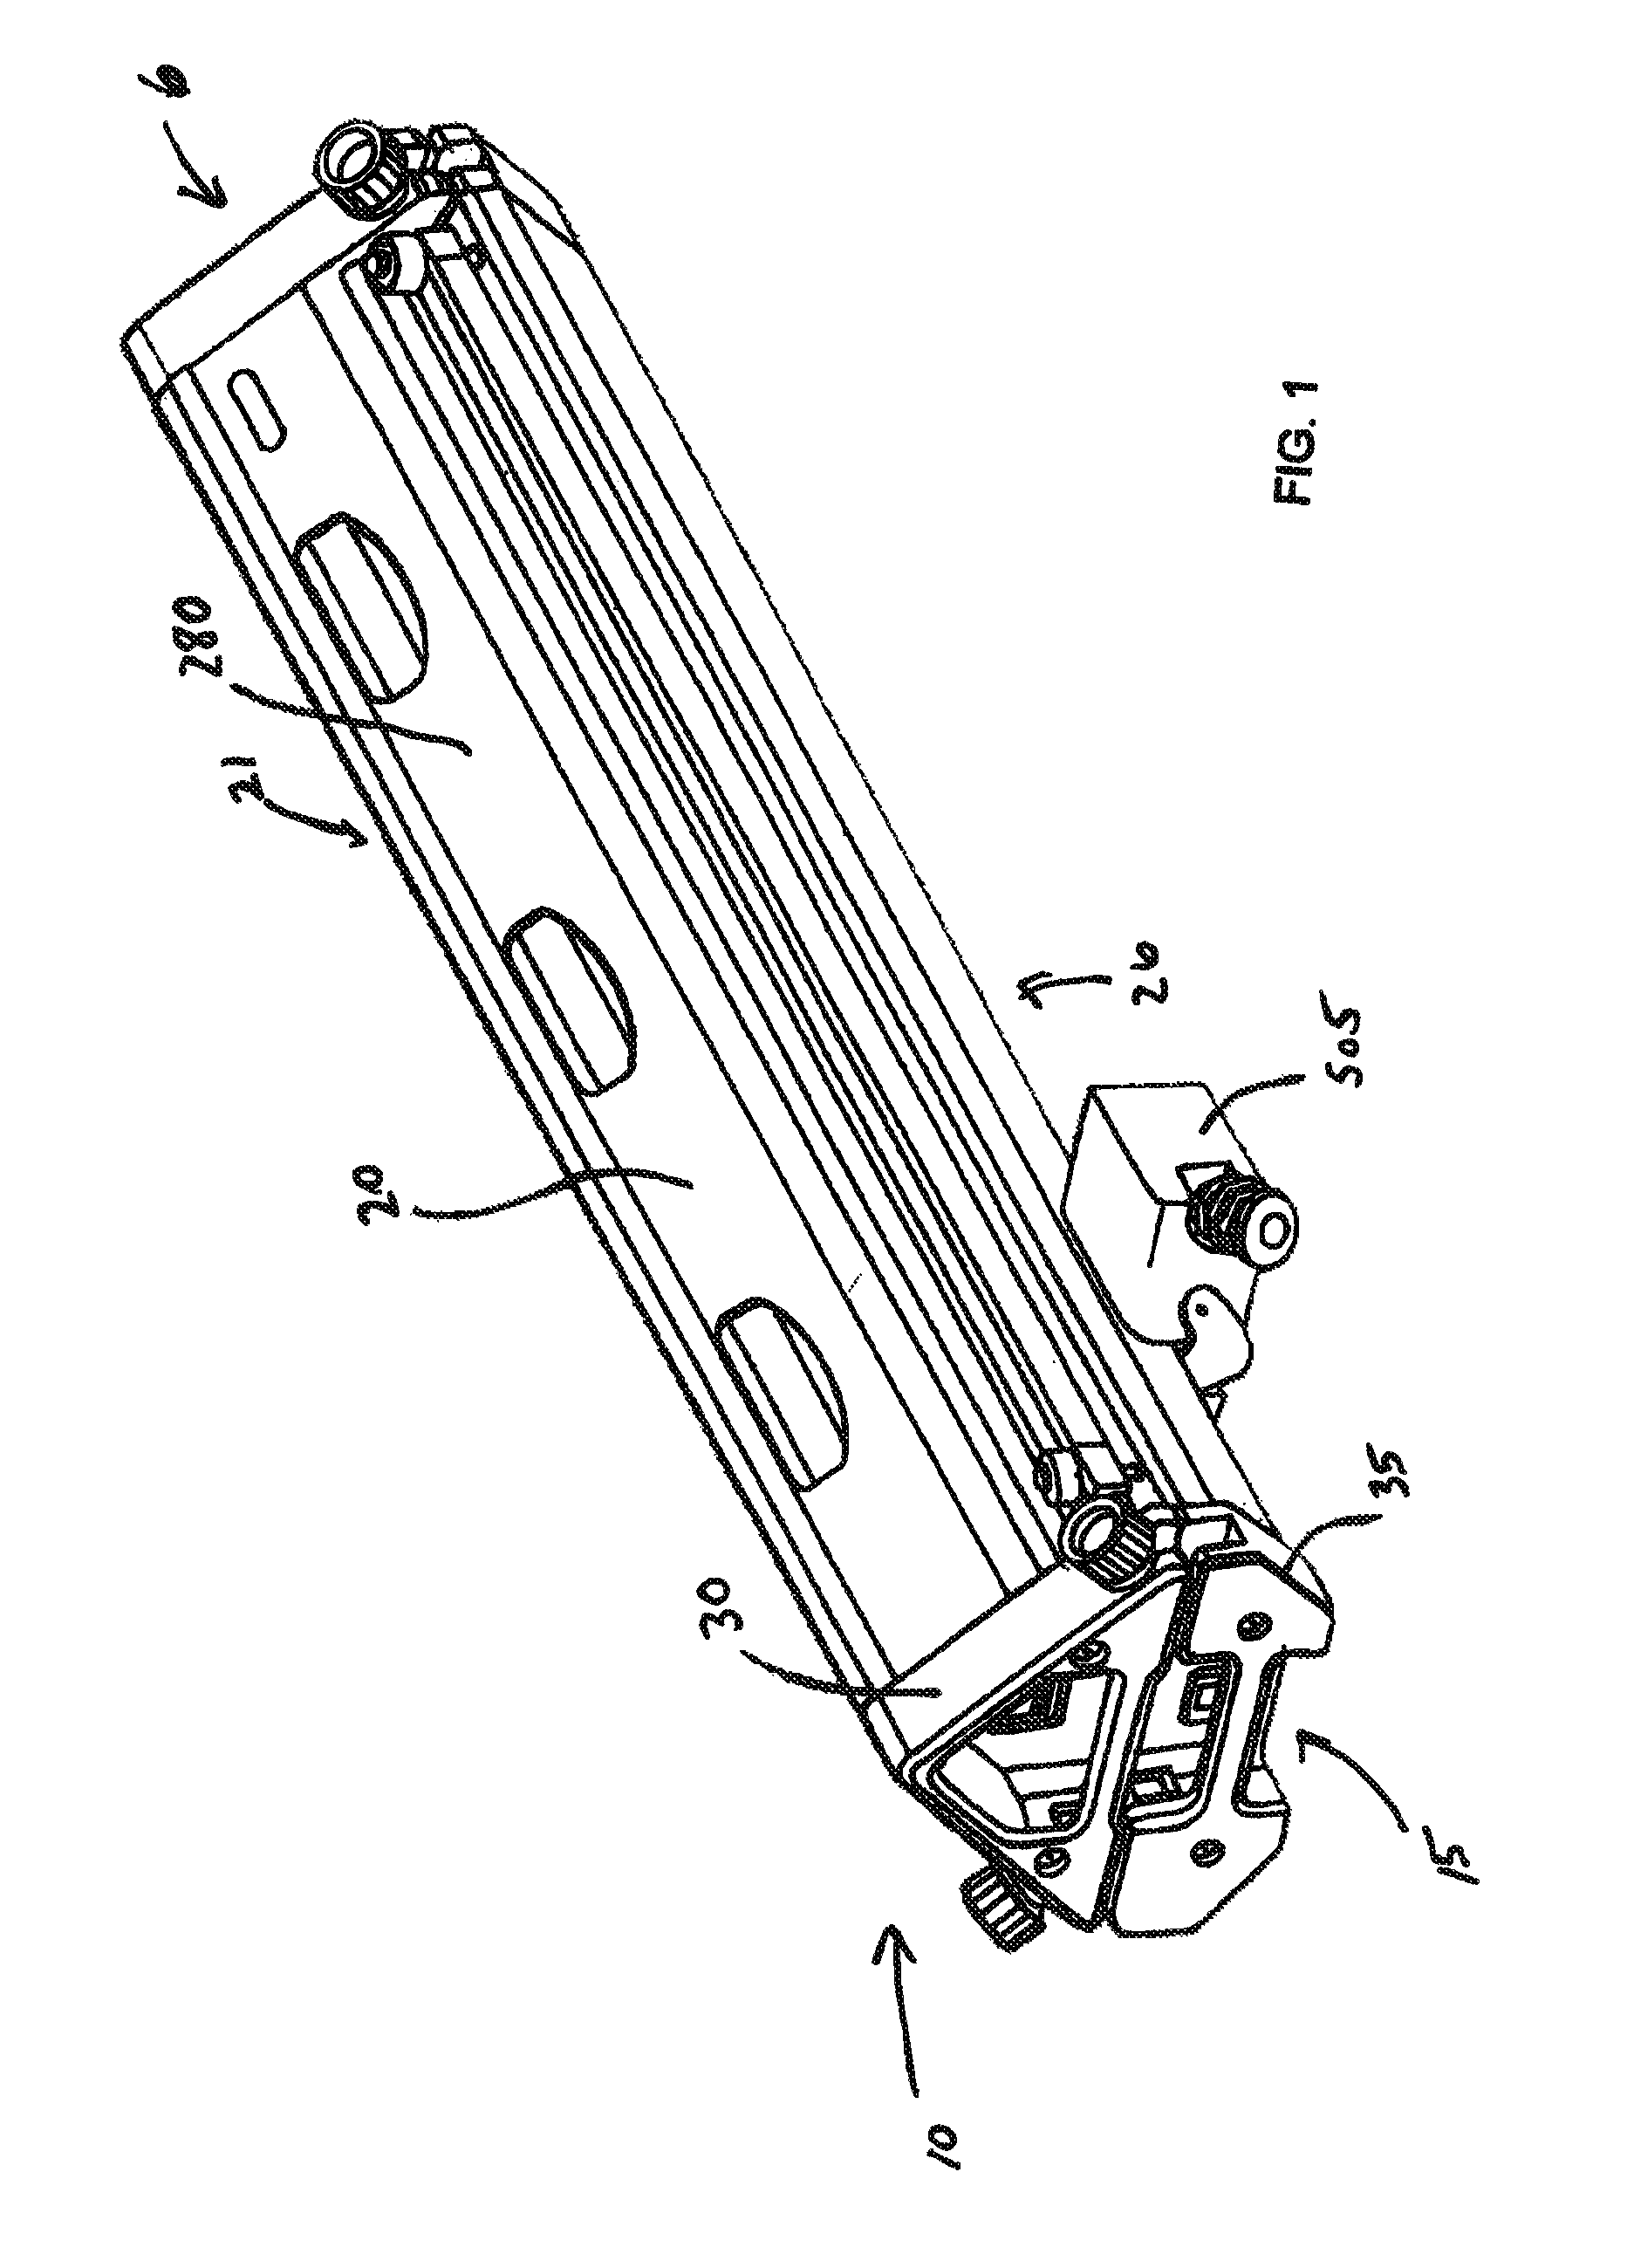 Belt splicing apparatus for conveyor belts